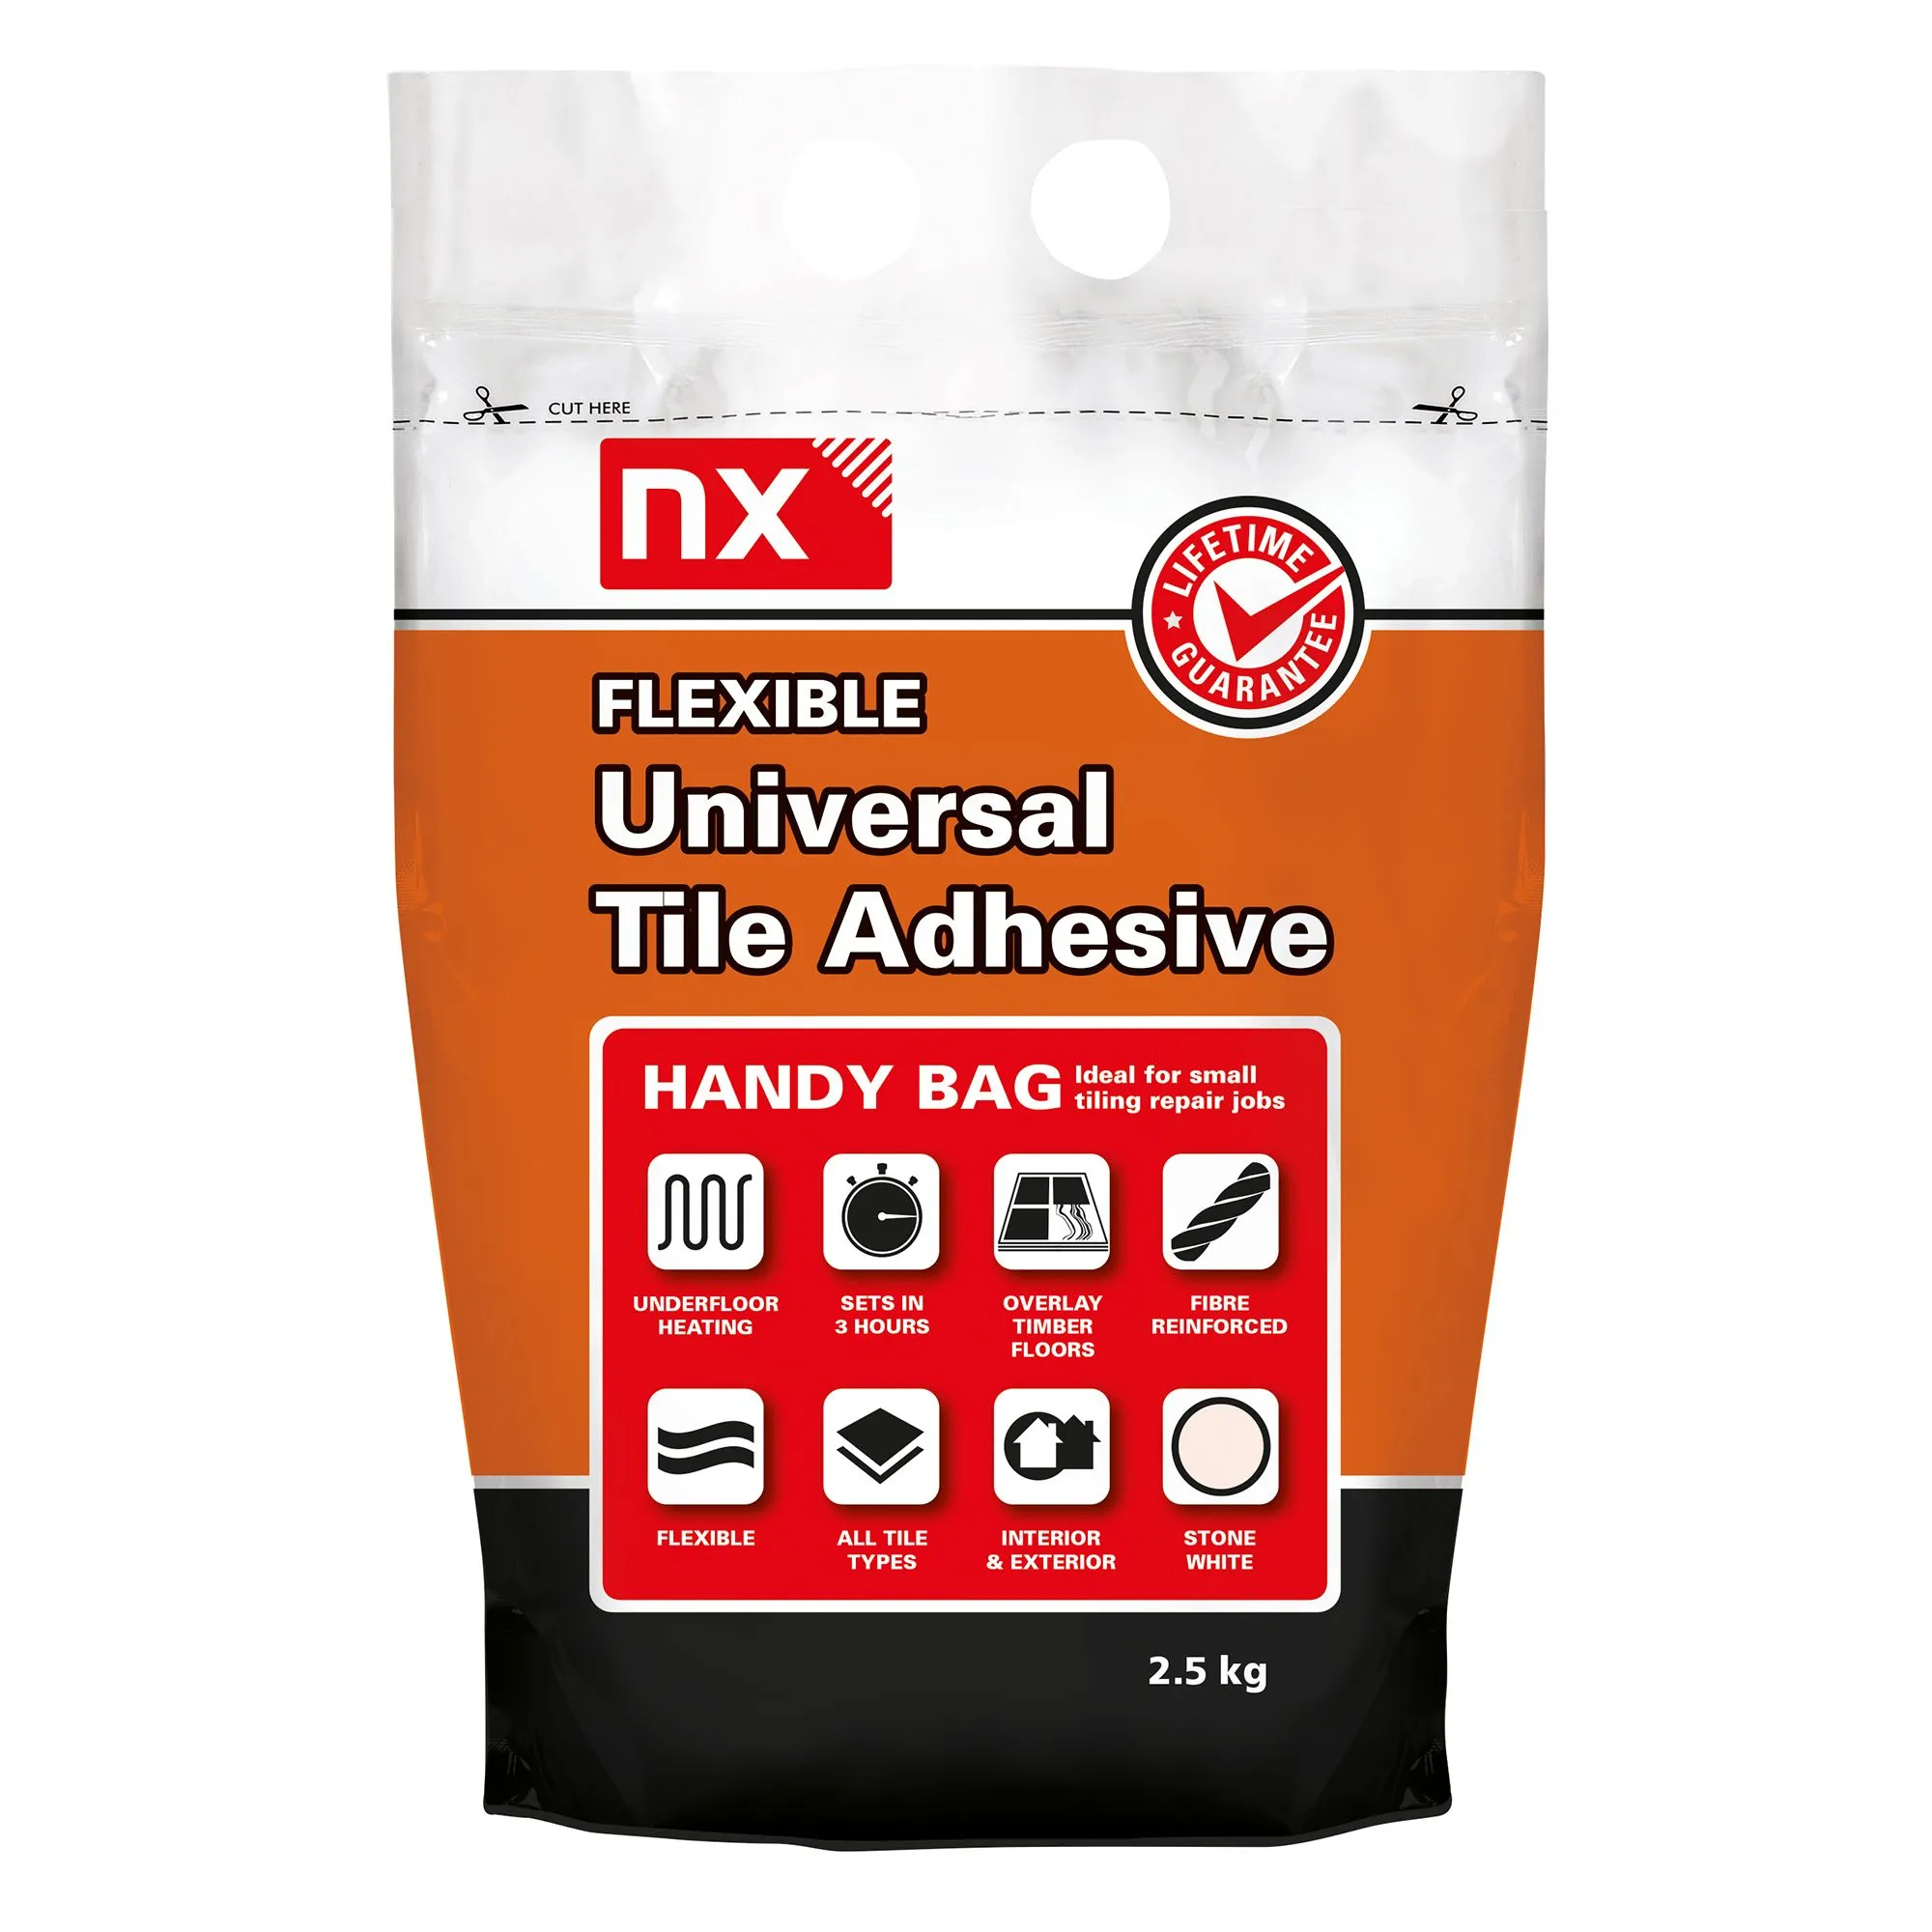 NX Flexible Universal Stone white Tile Adhesive, 2.5kg